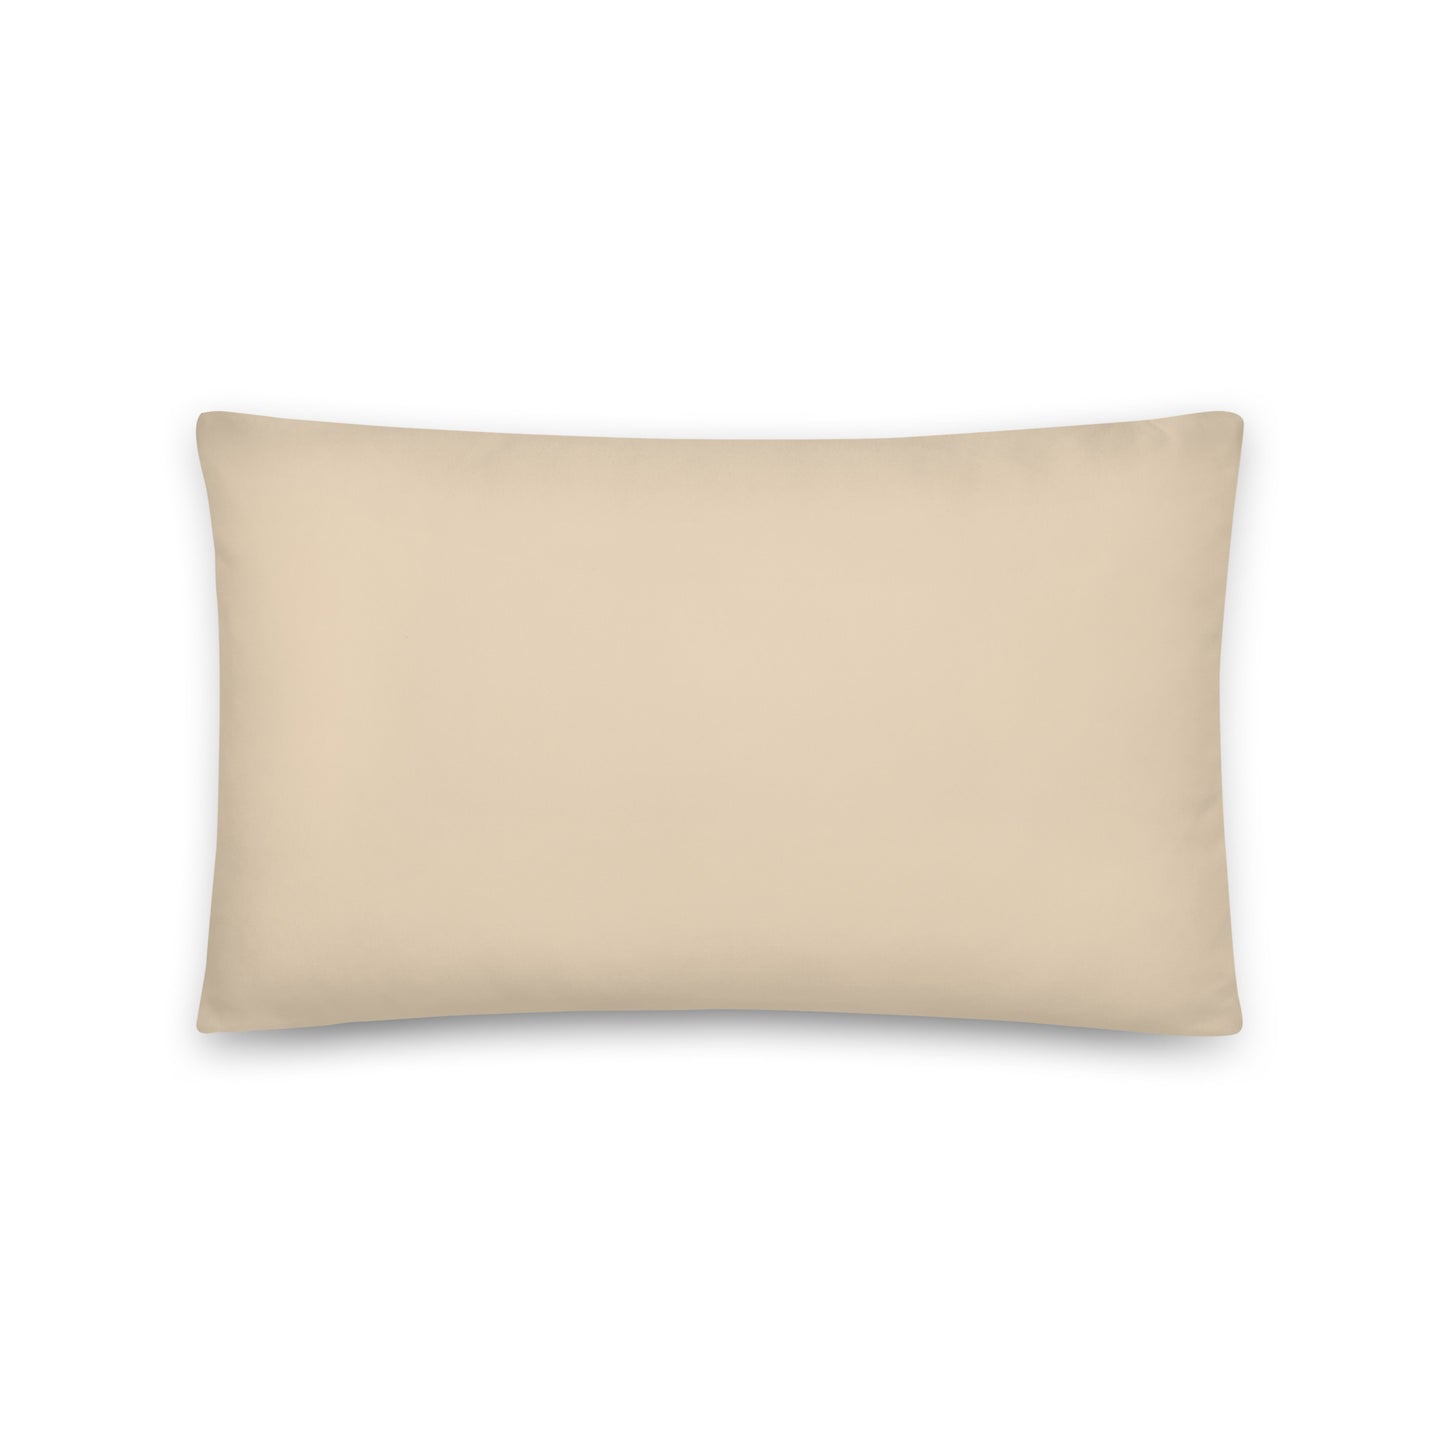 Basic Cream - Sustainably Made Pillows